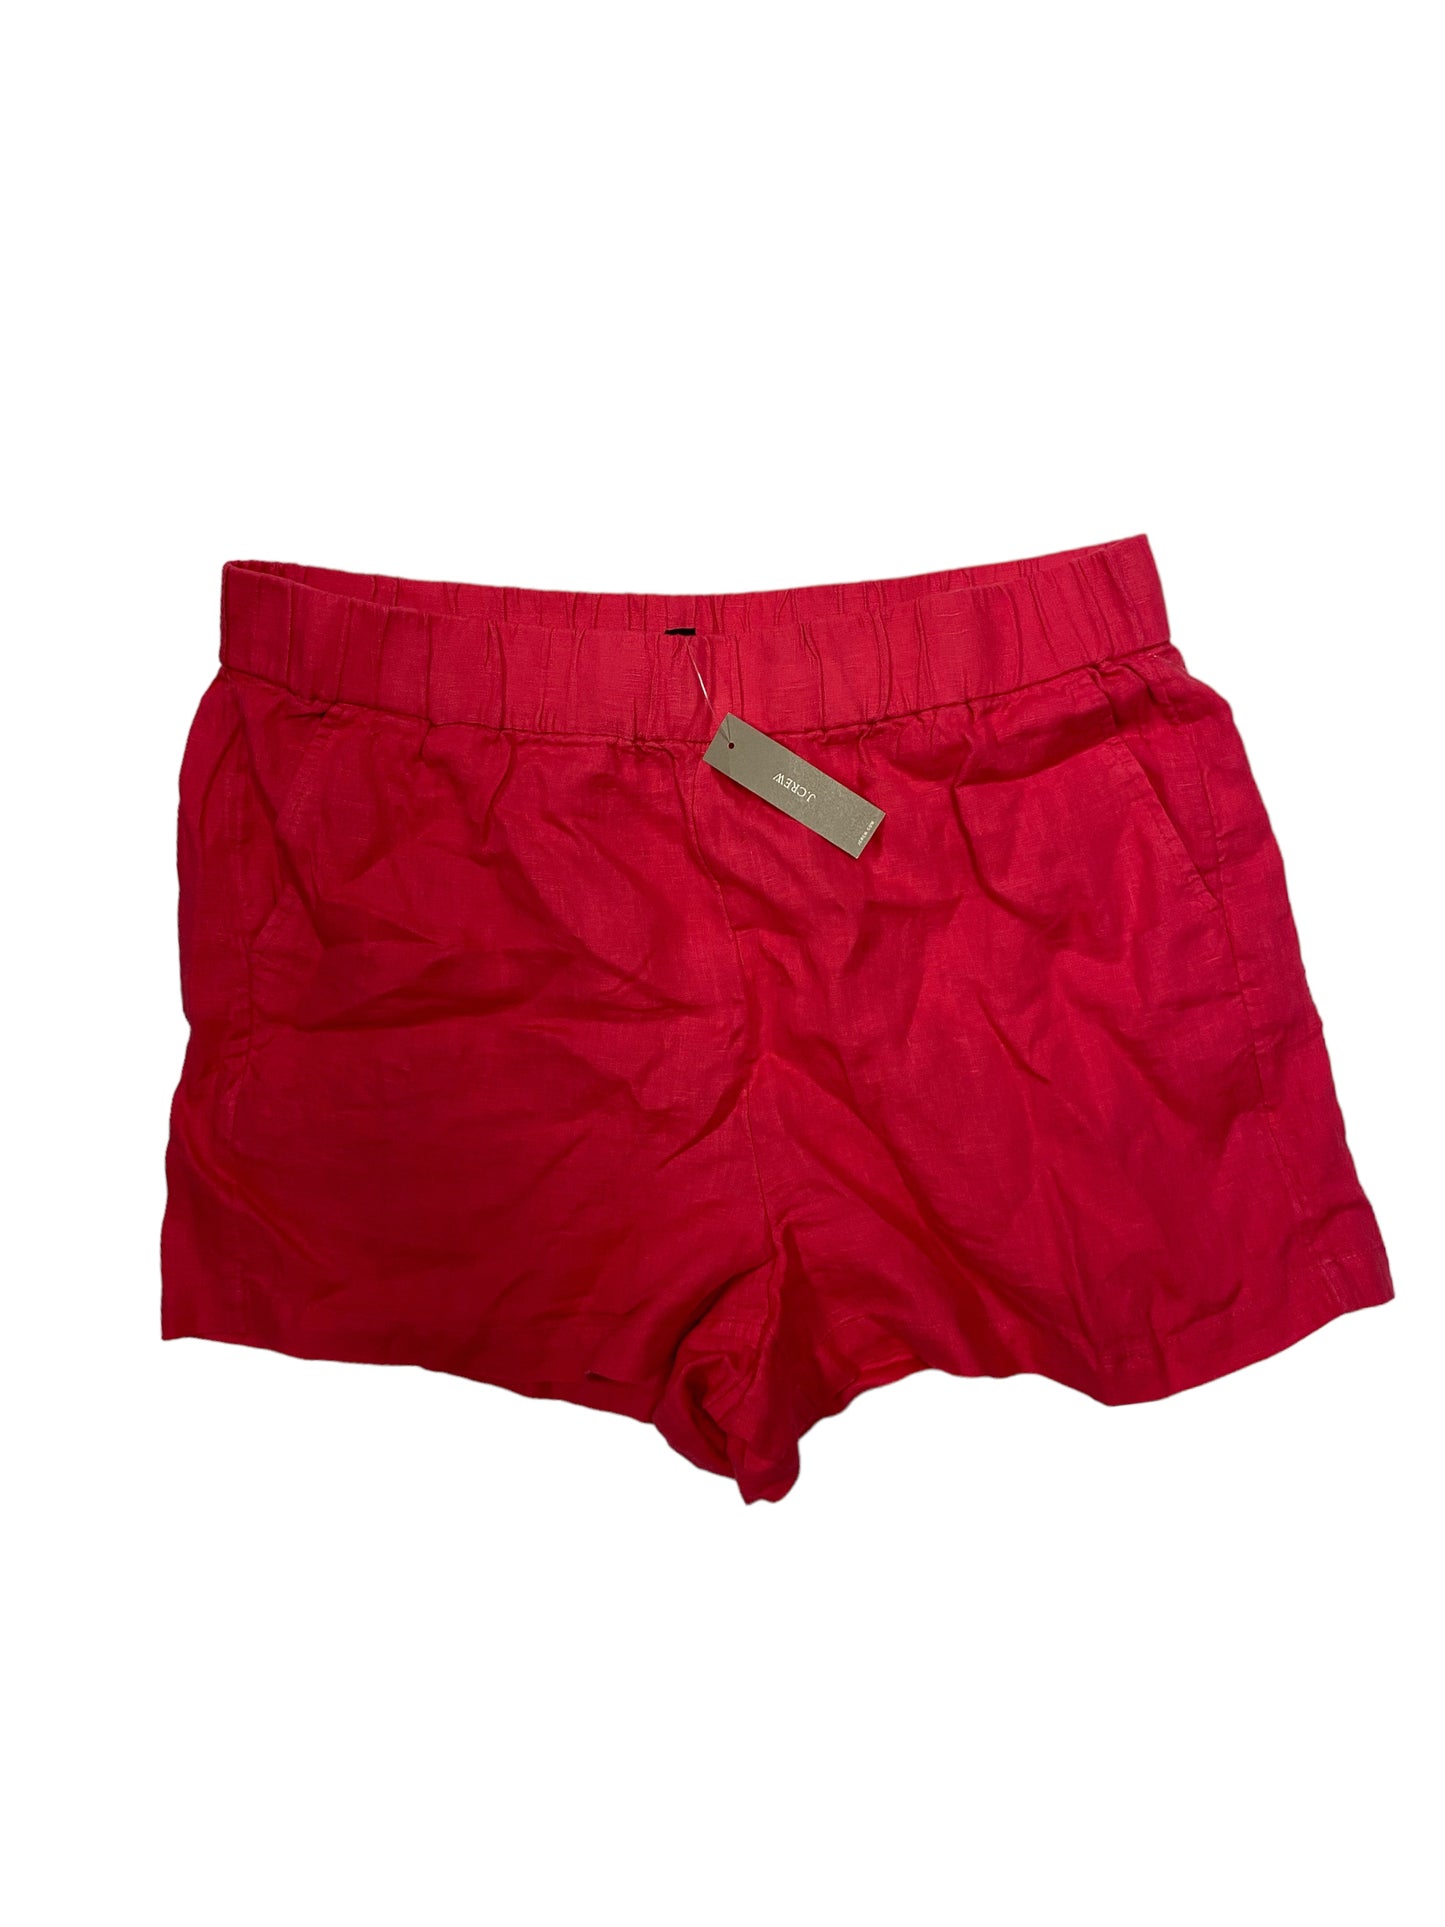 Pink Shorts J. Crew, Size L